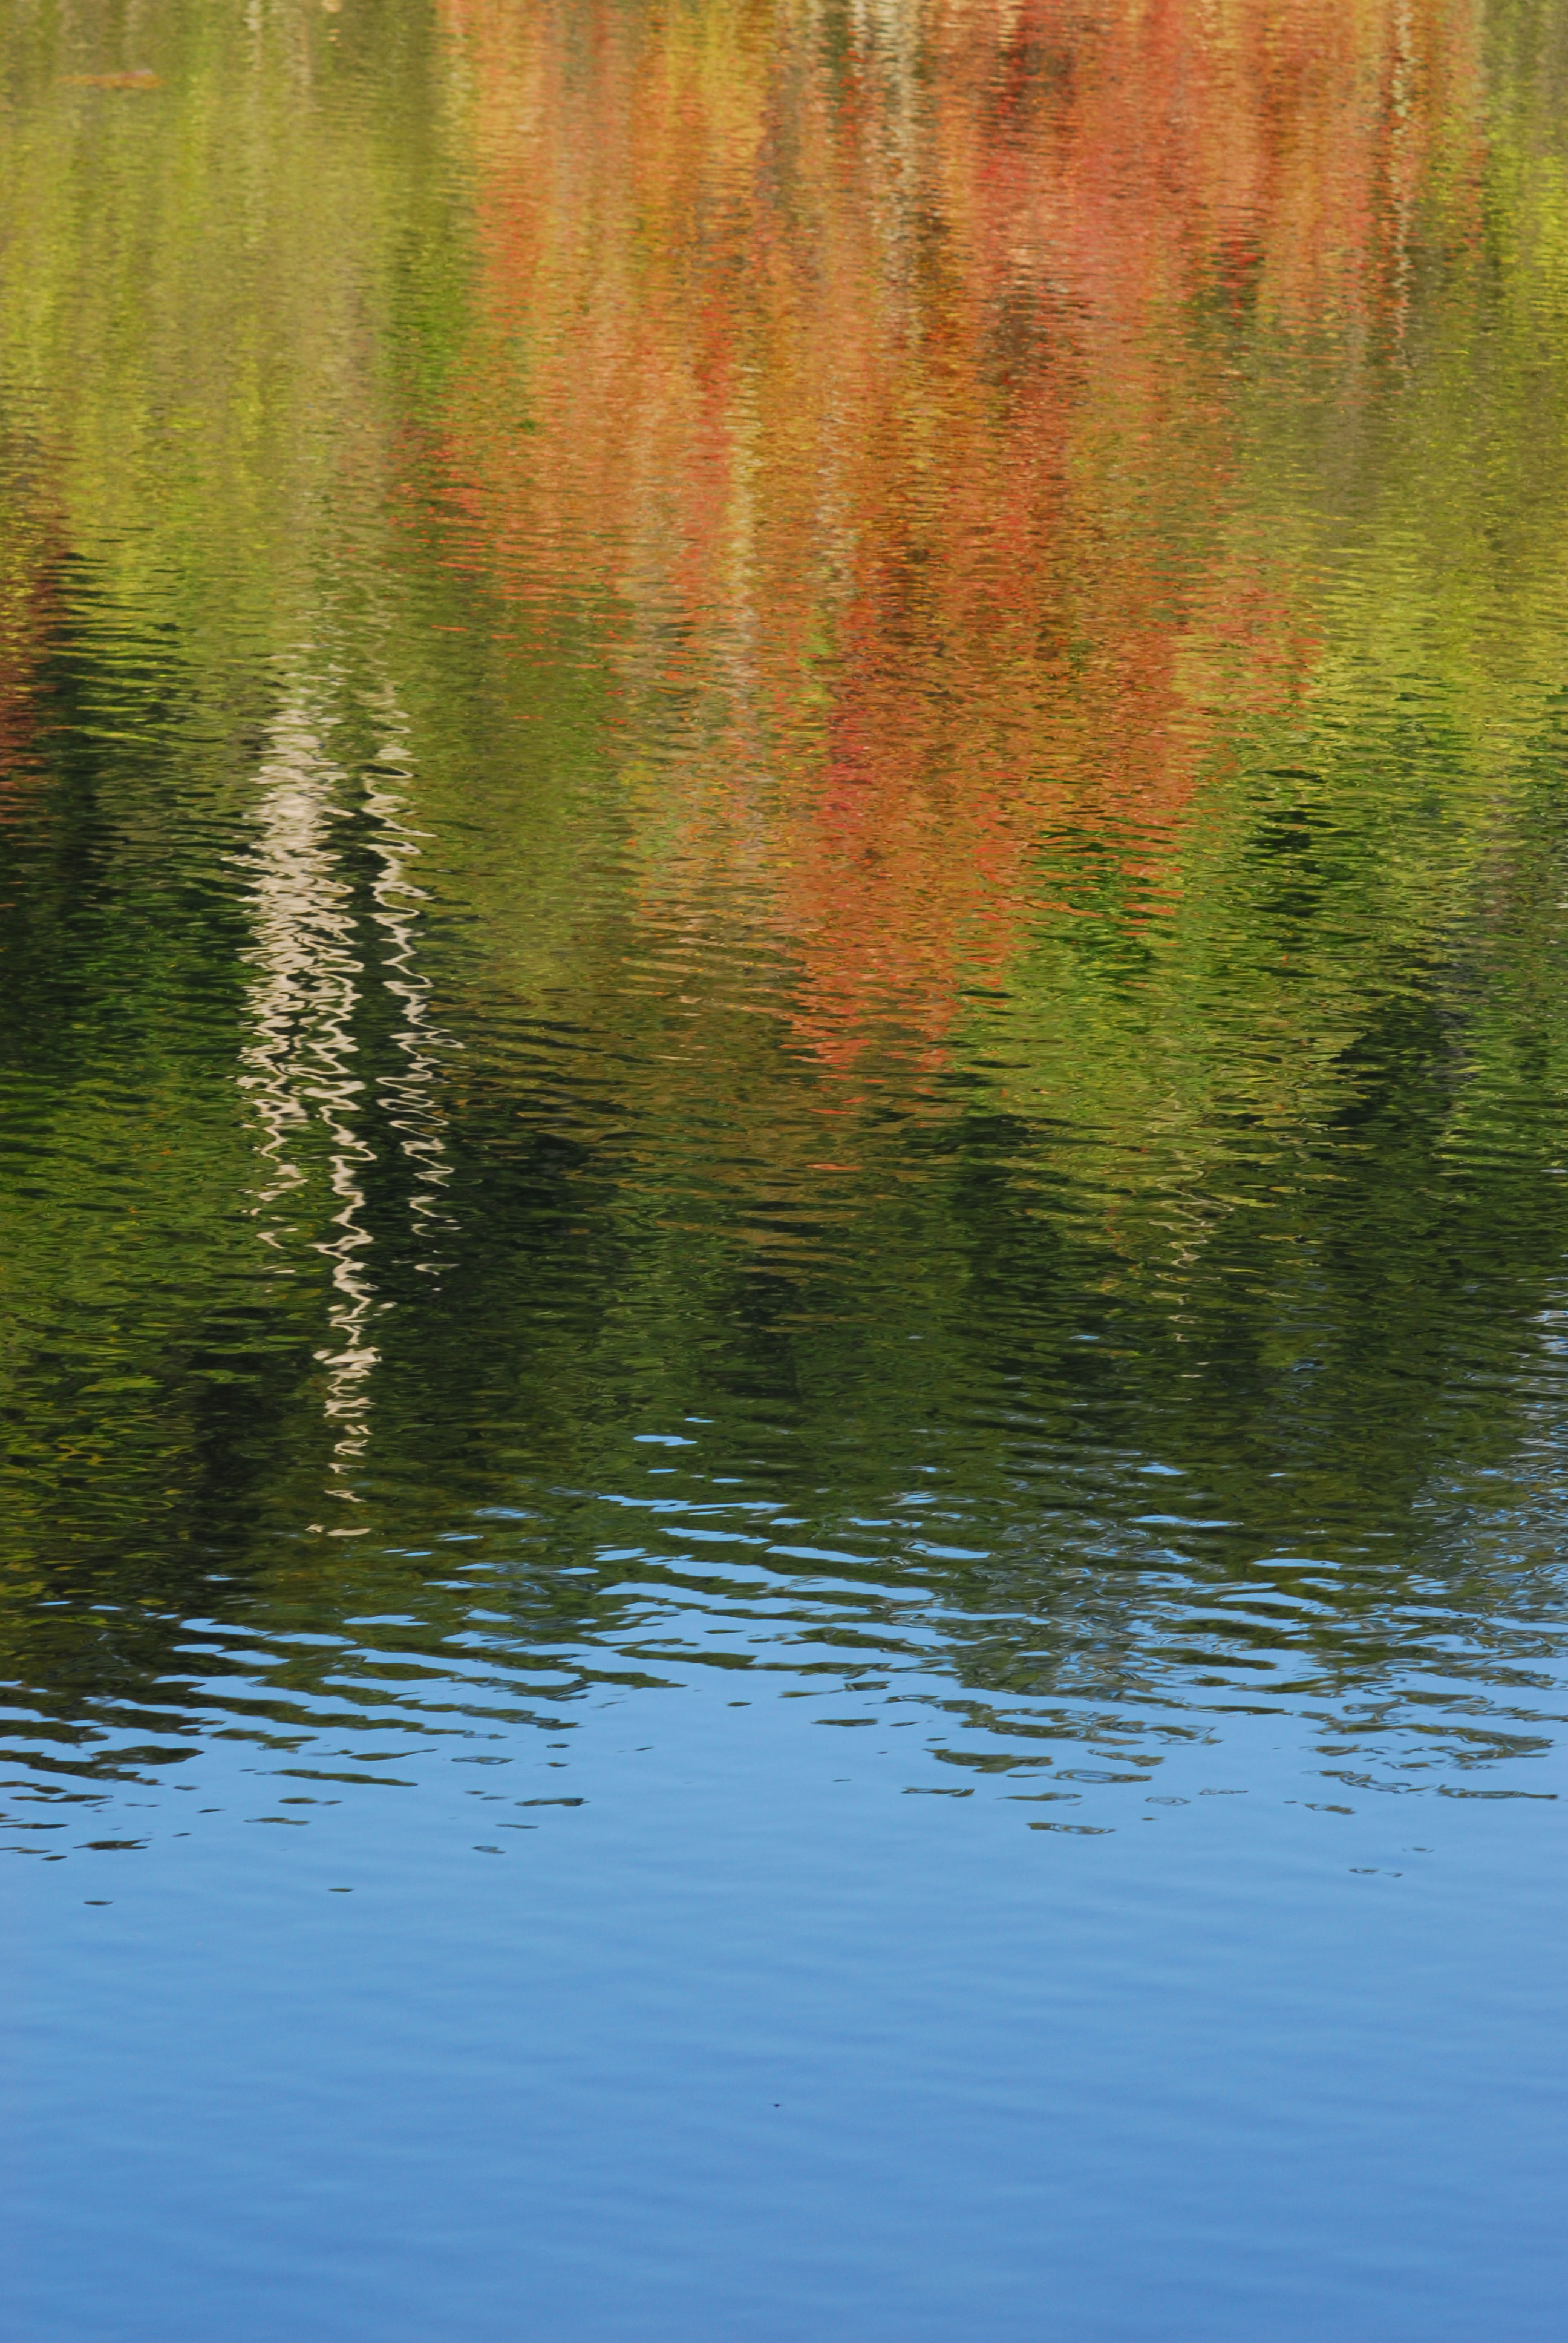 Reflection in Upper Pond  -  Palmetto Trail, Blue Wall Preserve, South Carolina